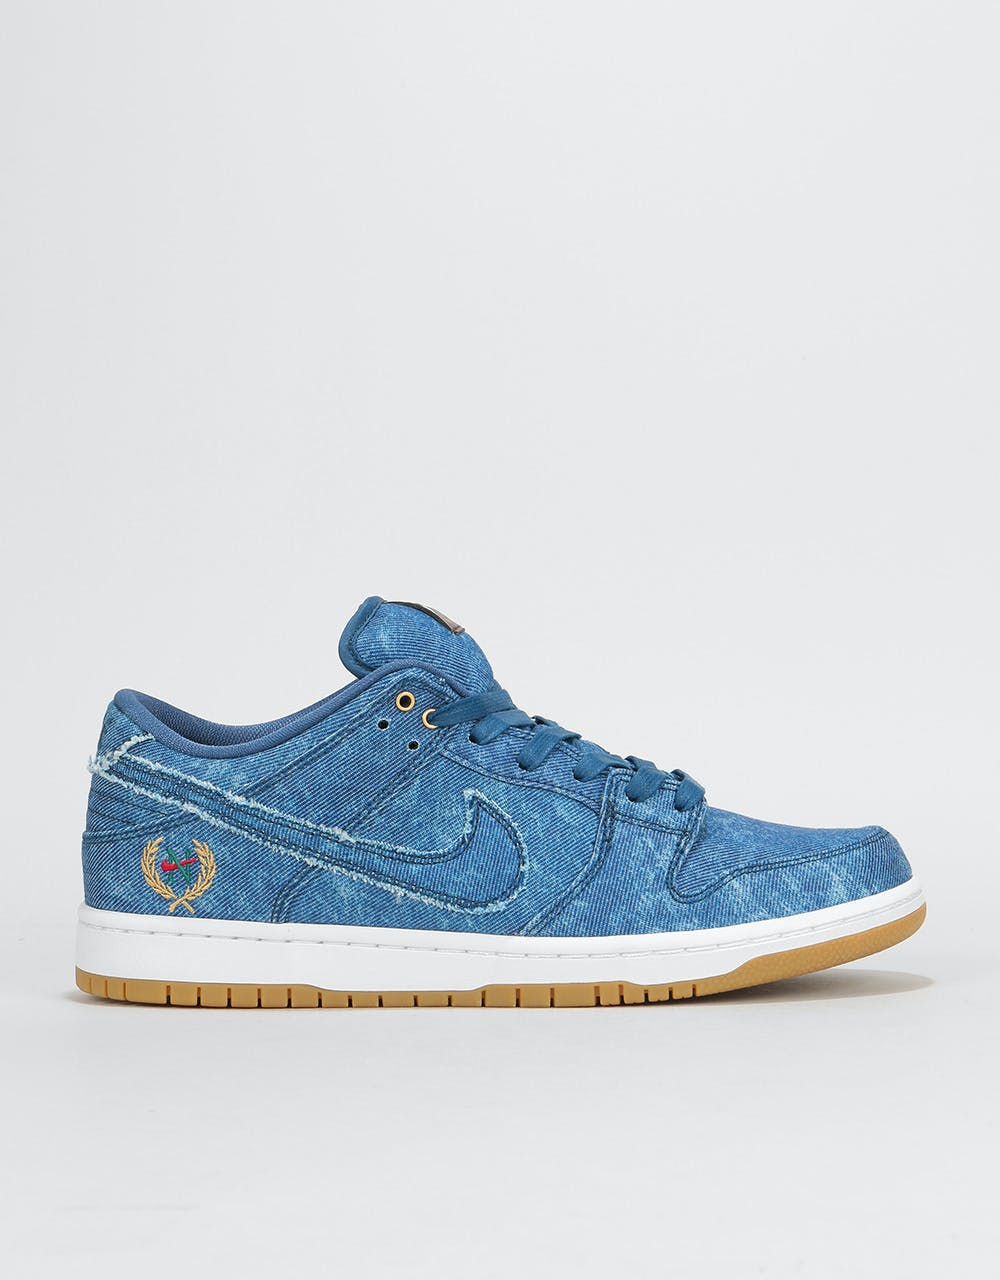 Nike SB Dunk Low Skate Shoes - Hydrogen Blue/Hydrogen Blue-White